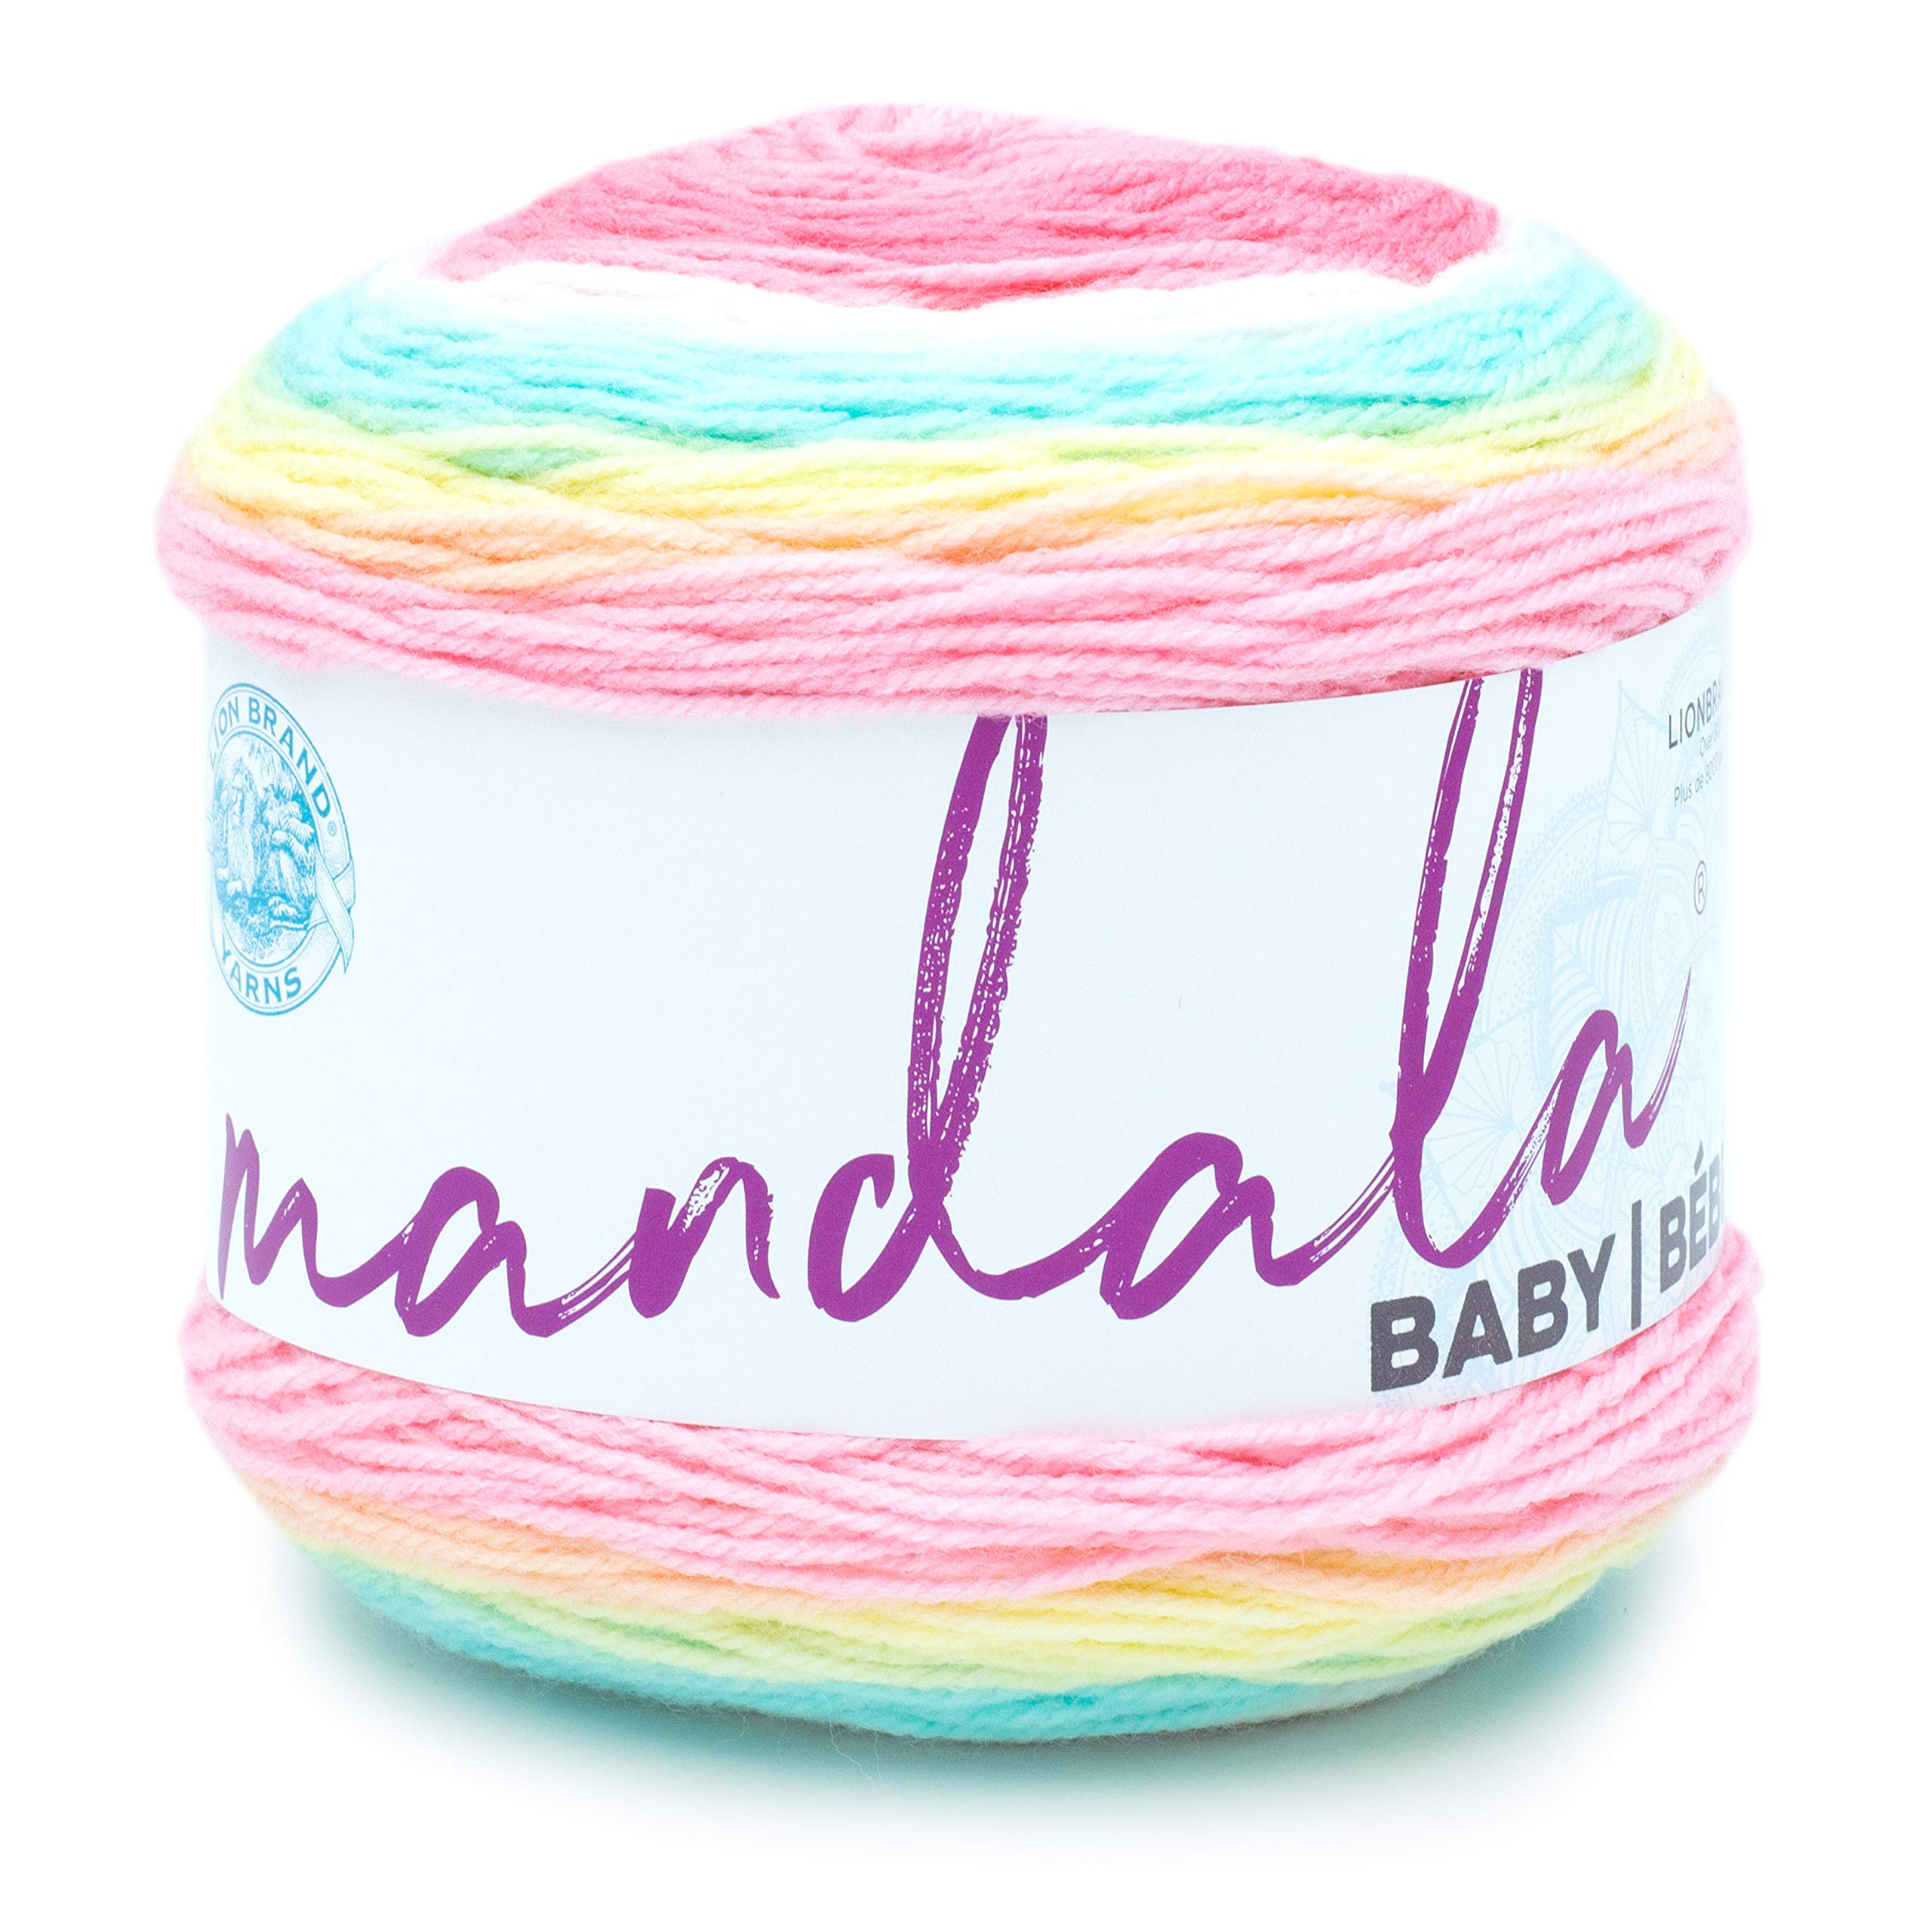 Lion Brand Yarn (1 Skein) Mandala Baby Yarn, Narnia, 1770 Foot (Pack of 1)